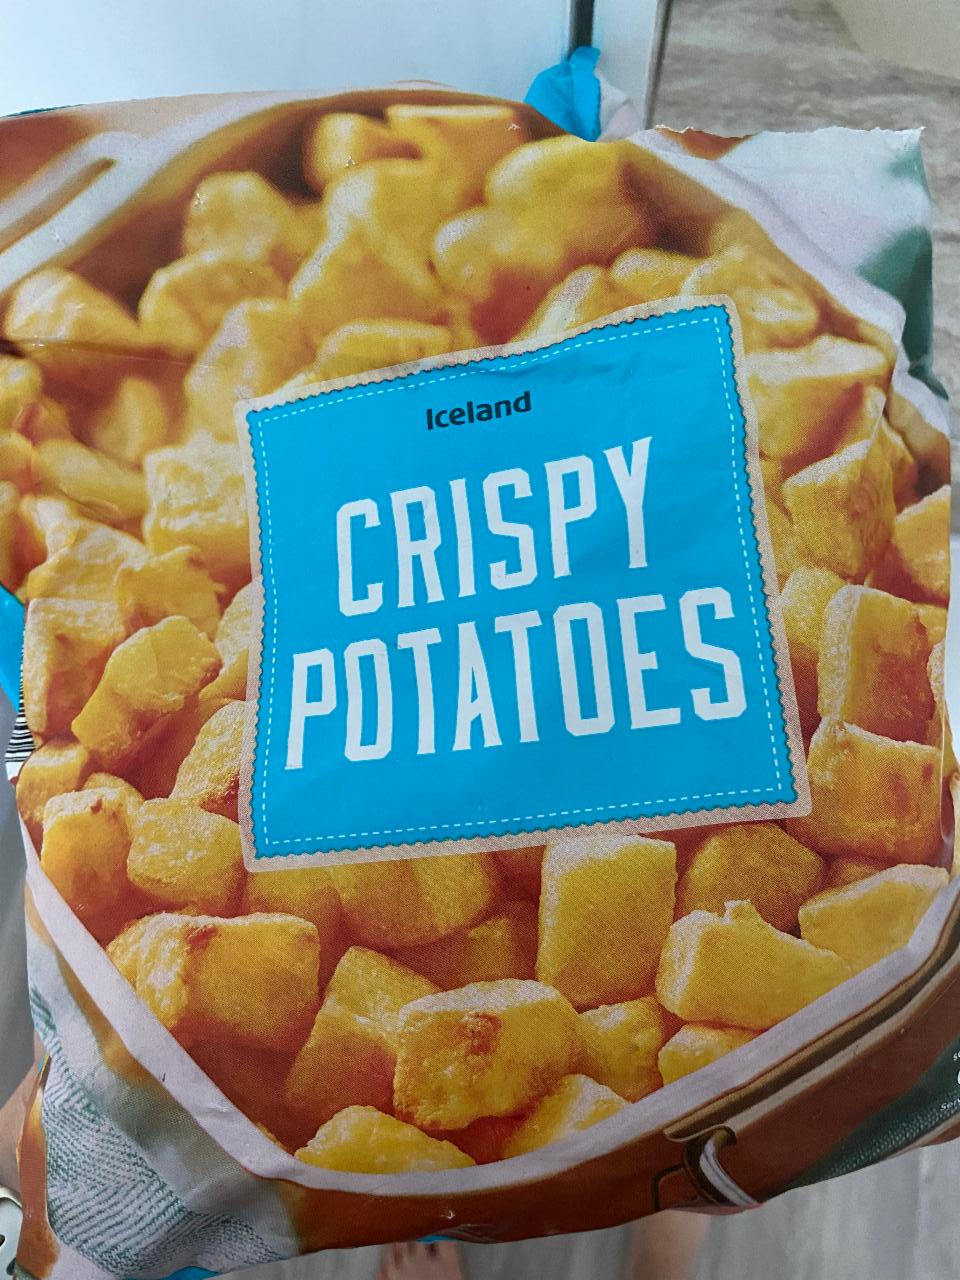 Fotografie - Crispy Potatoes Iceland